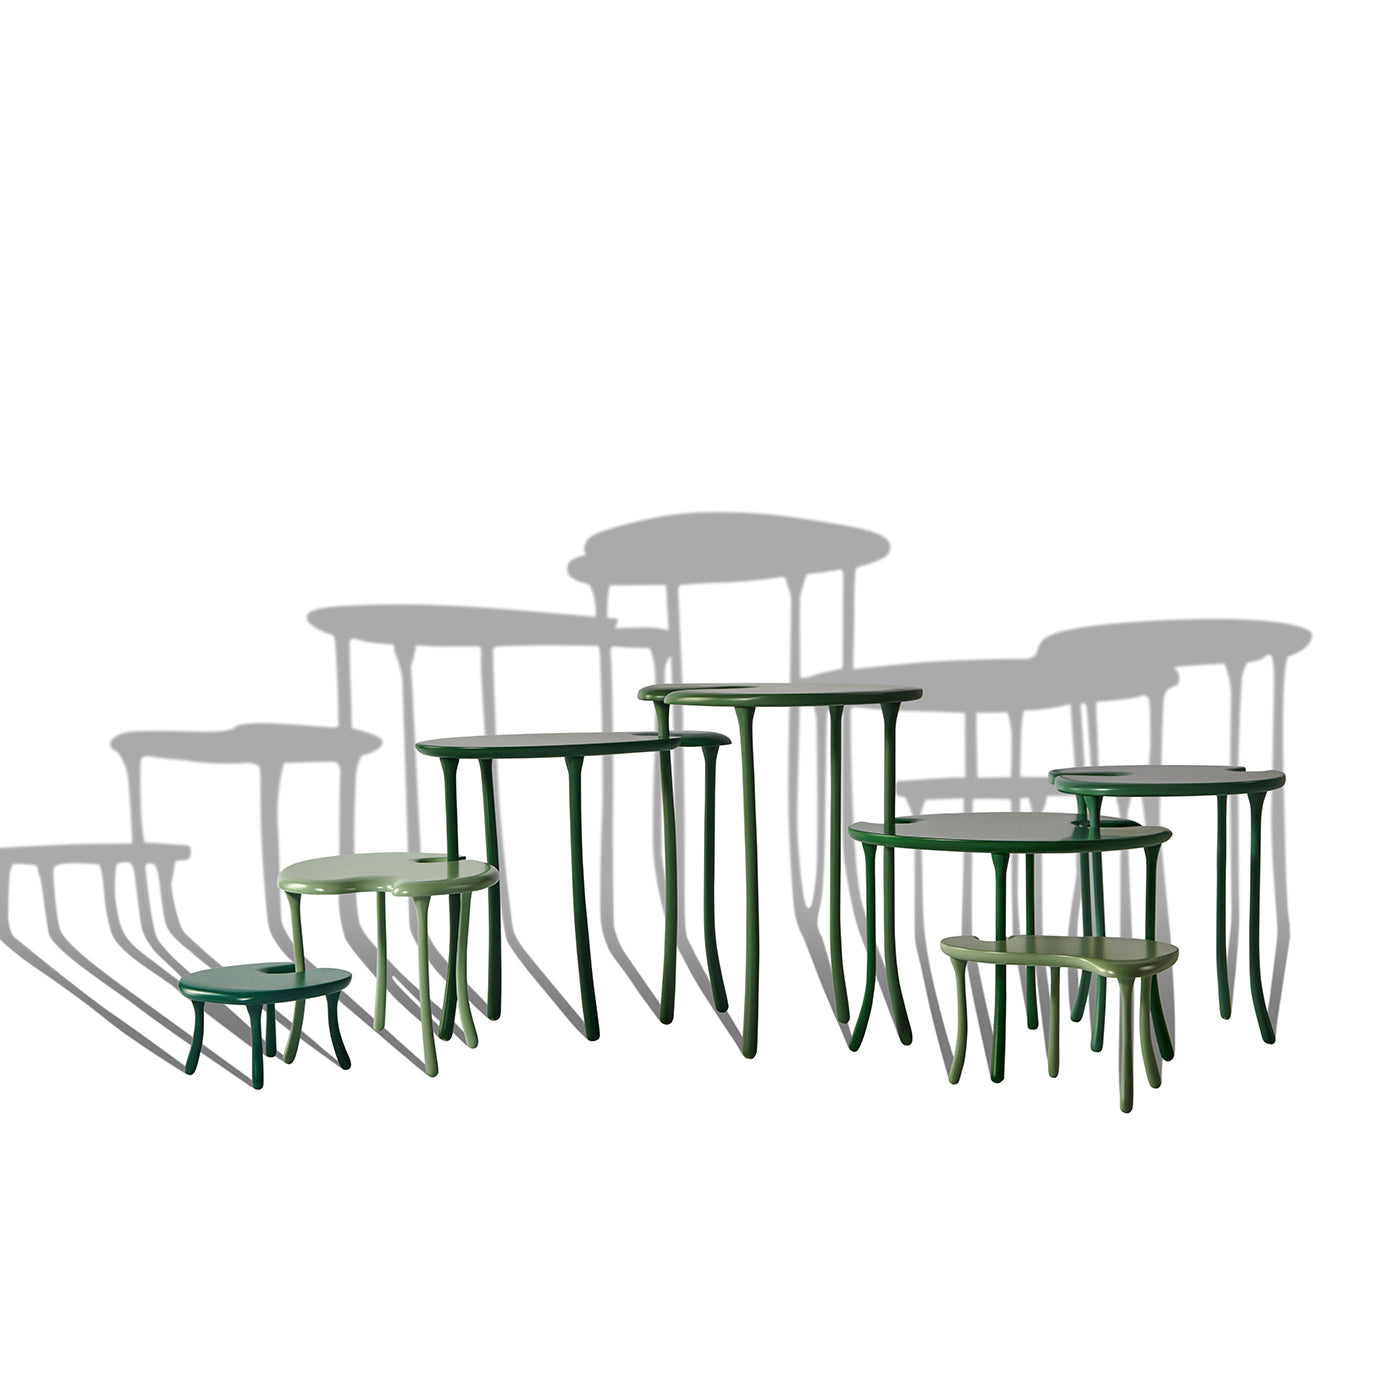 Tavo B 7-Piece Green Modular Set of Tables Limited Edition by Giuliano-Fukuda - Alternative view 1